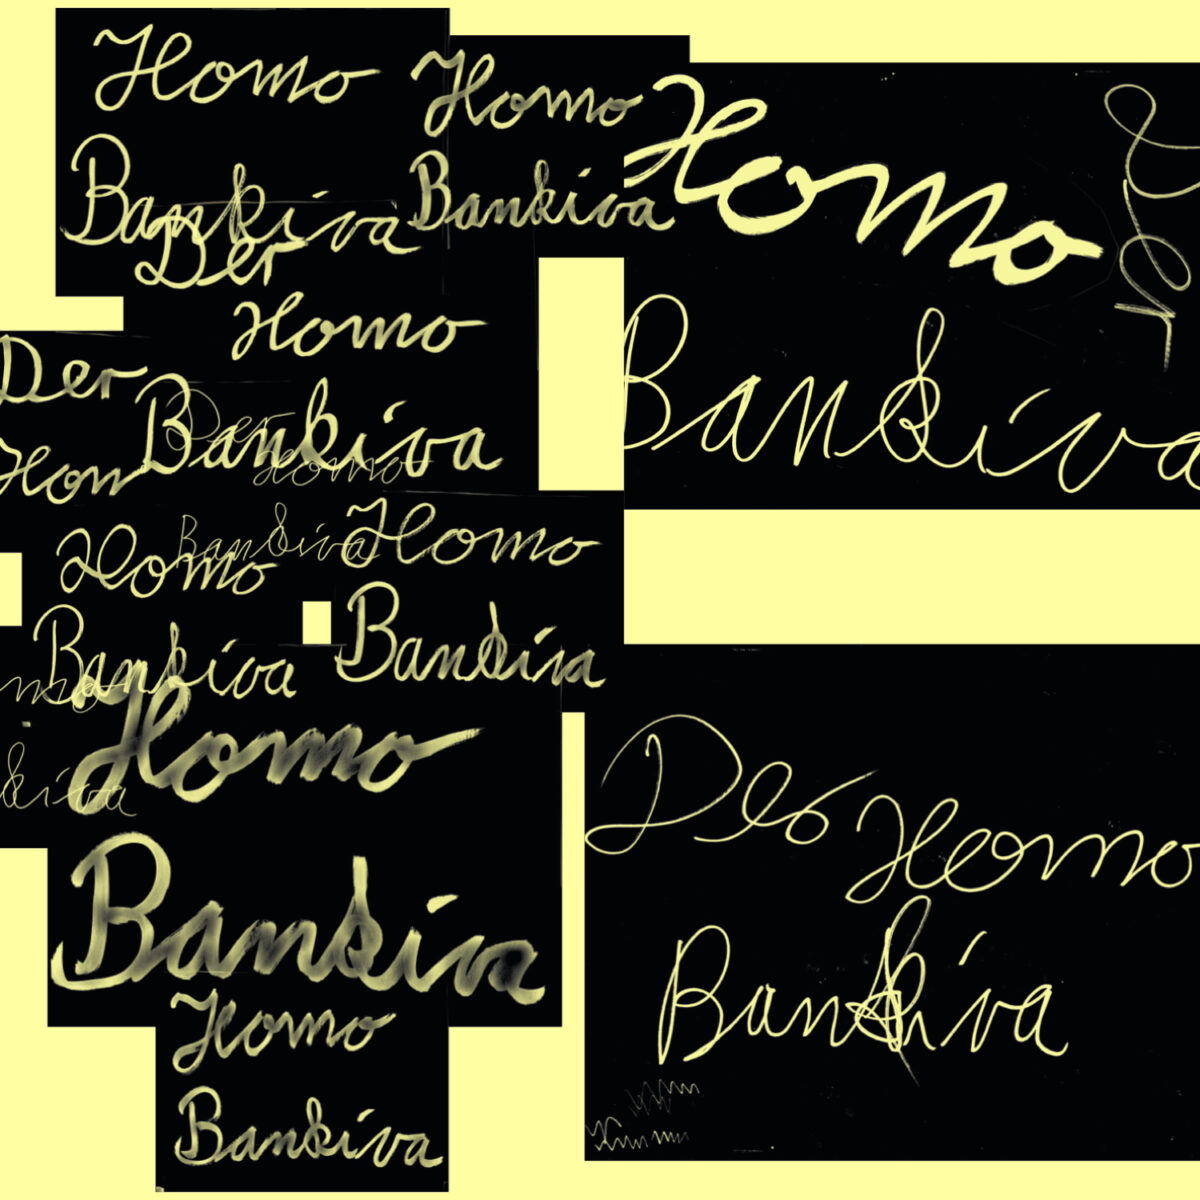 Homo Bankiva skizzen